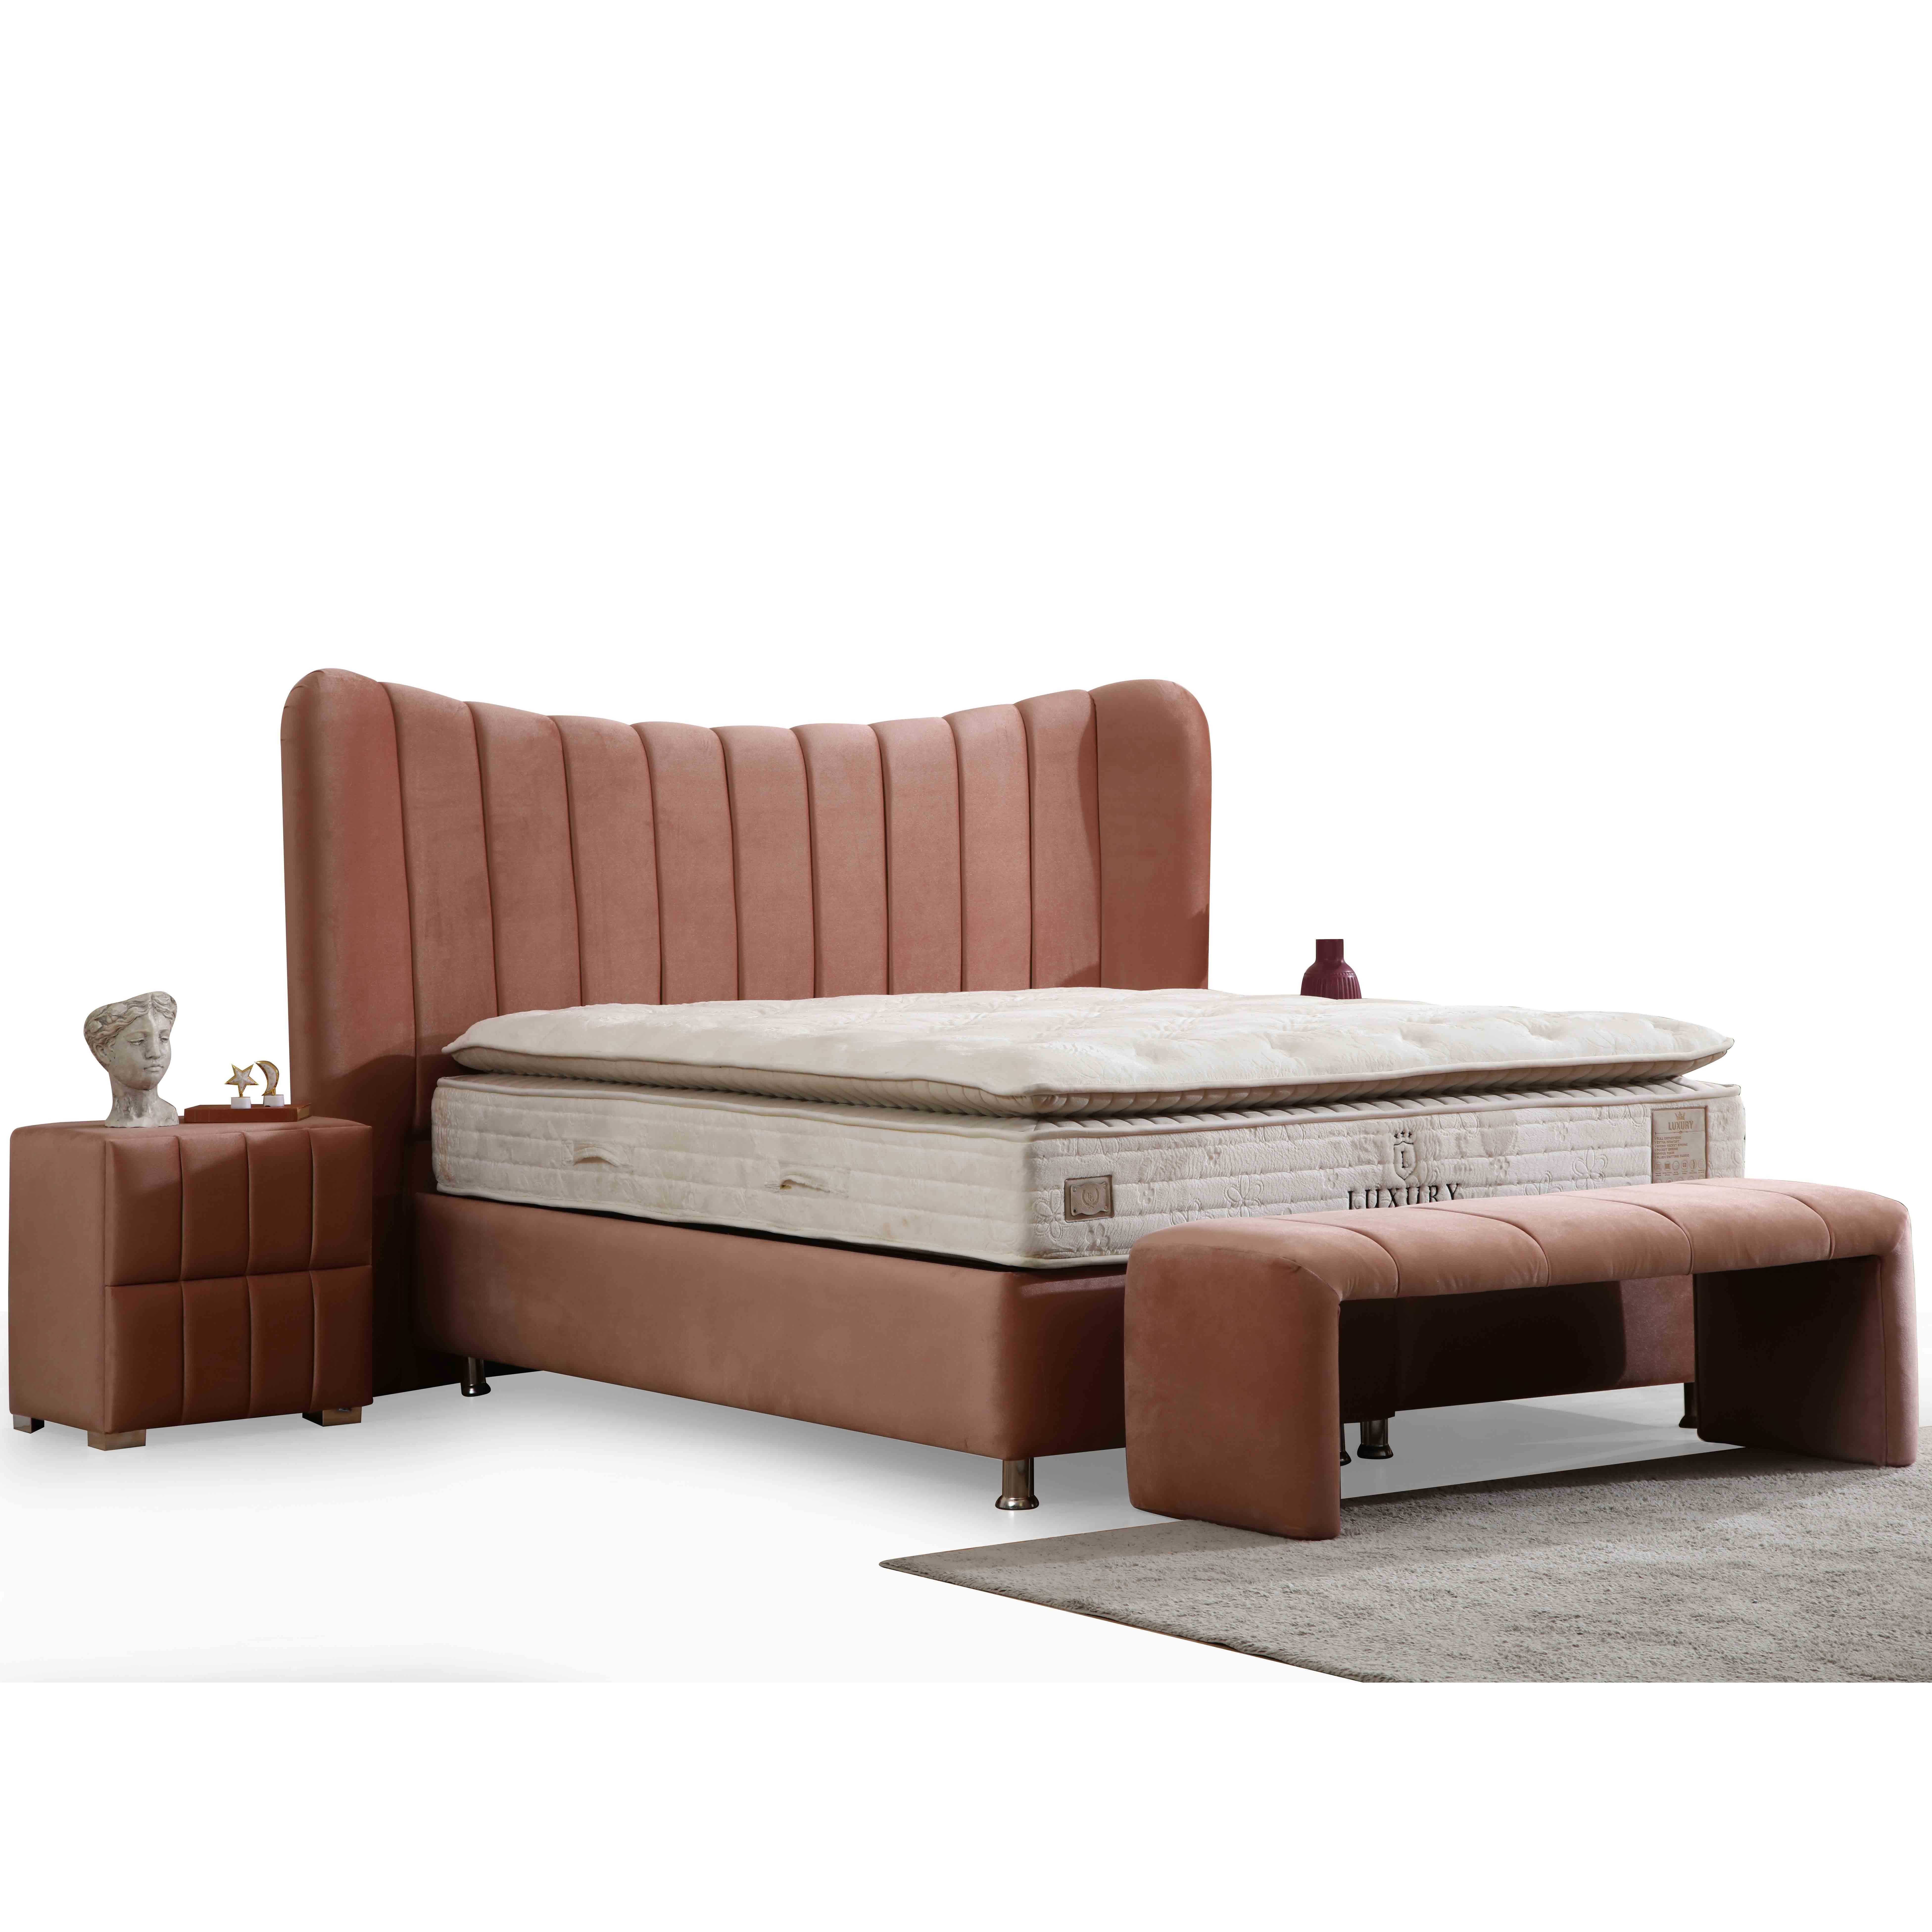 Rodos Bed With Storage 120x200 cm